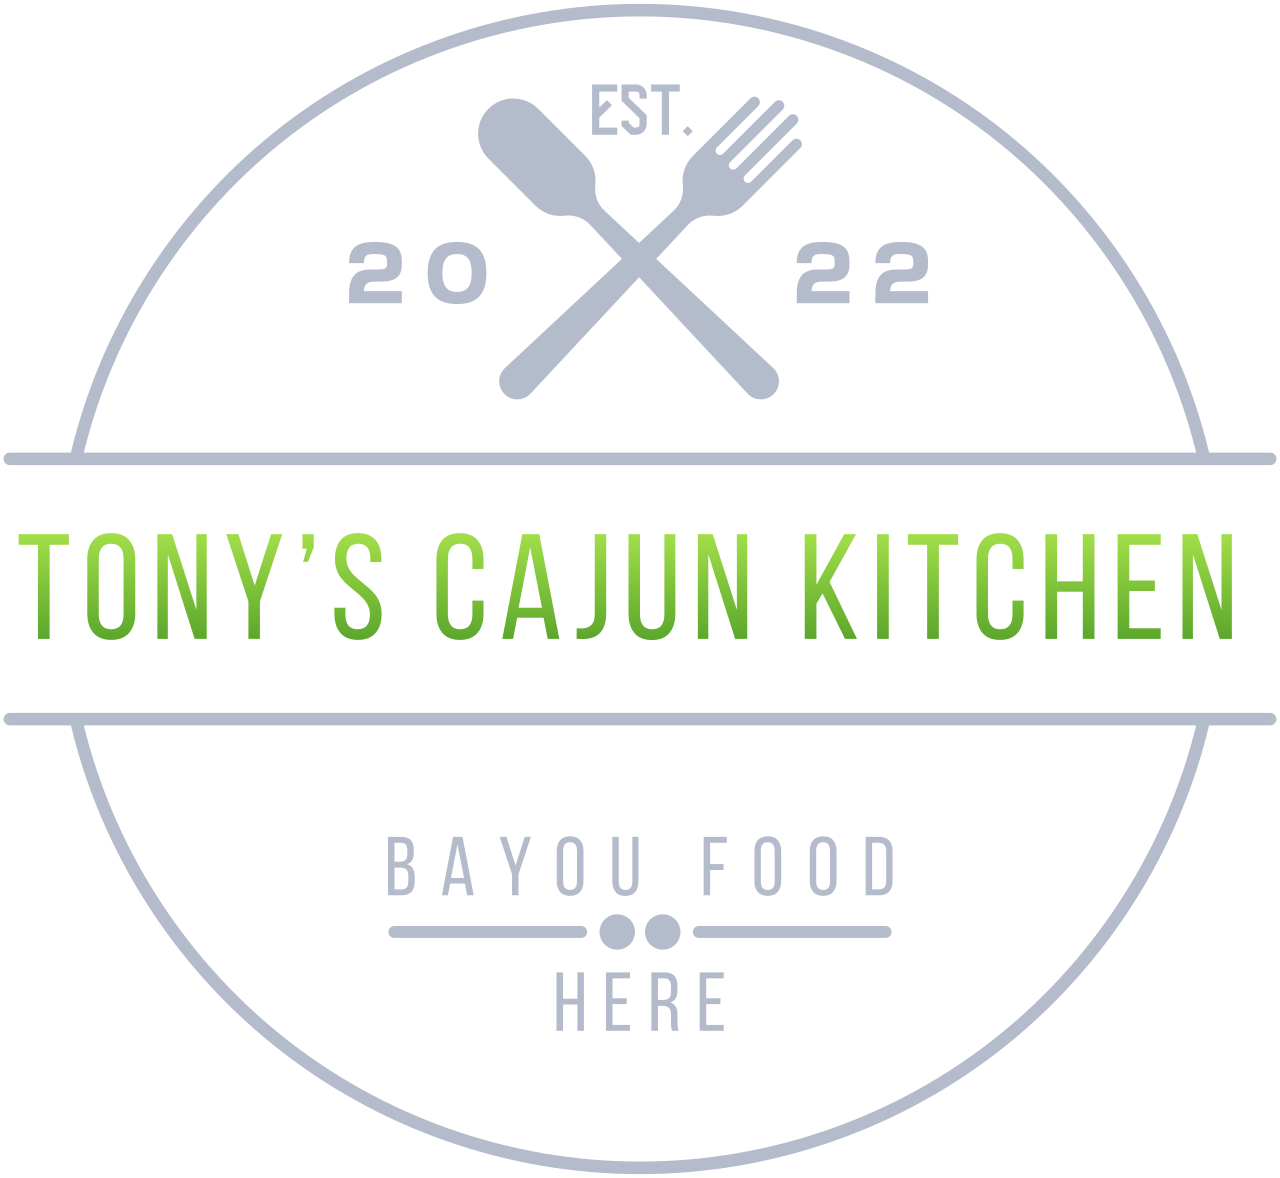 Tony's Cajun Kitchen's web page